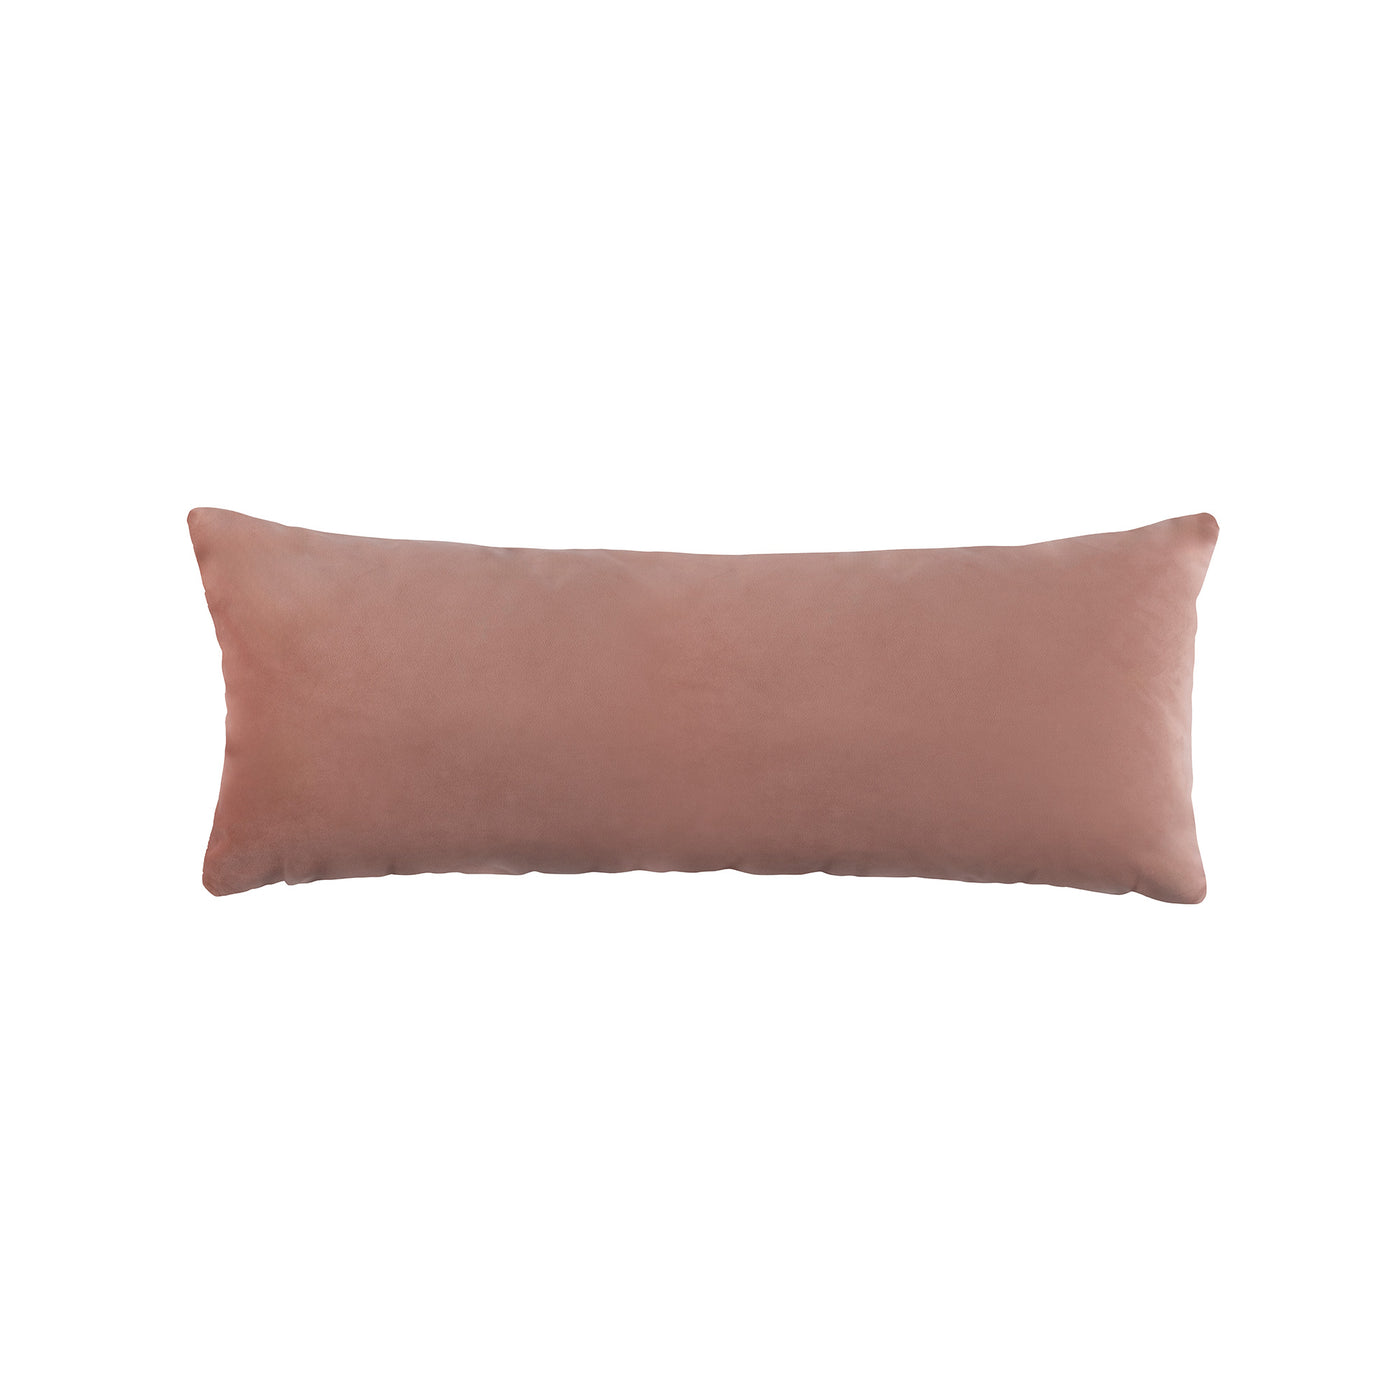 Vivid Shell Long Rectangle Pillow (18x46)